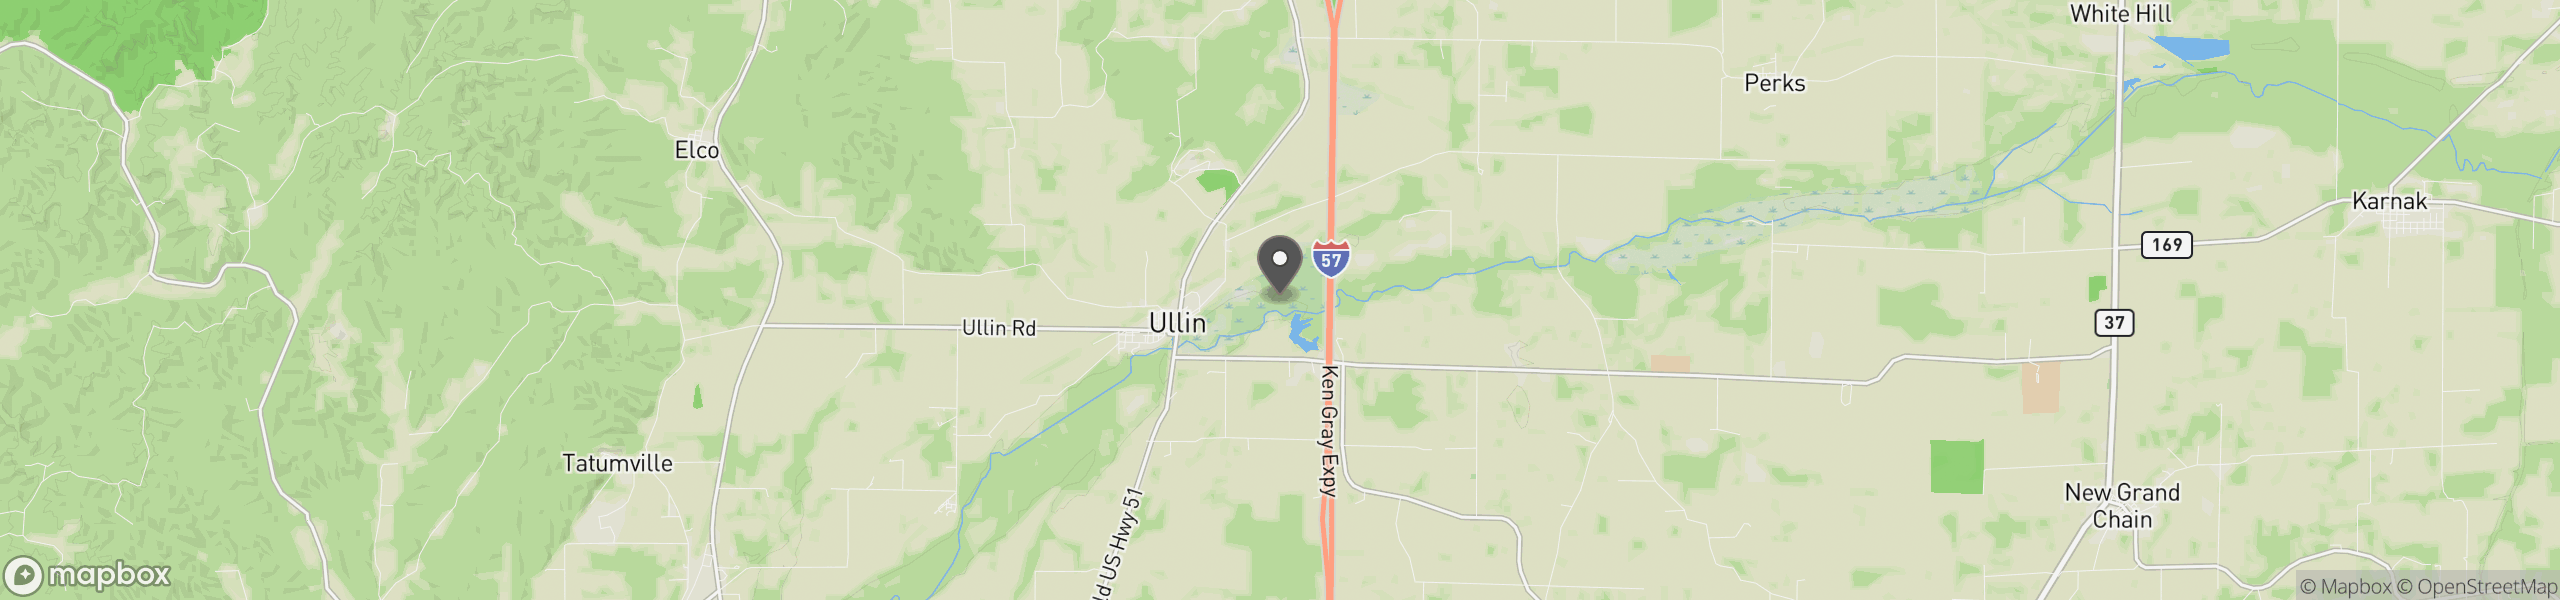 Ullin, IL 62992